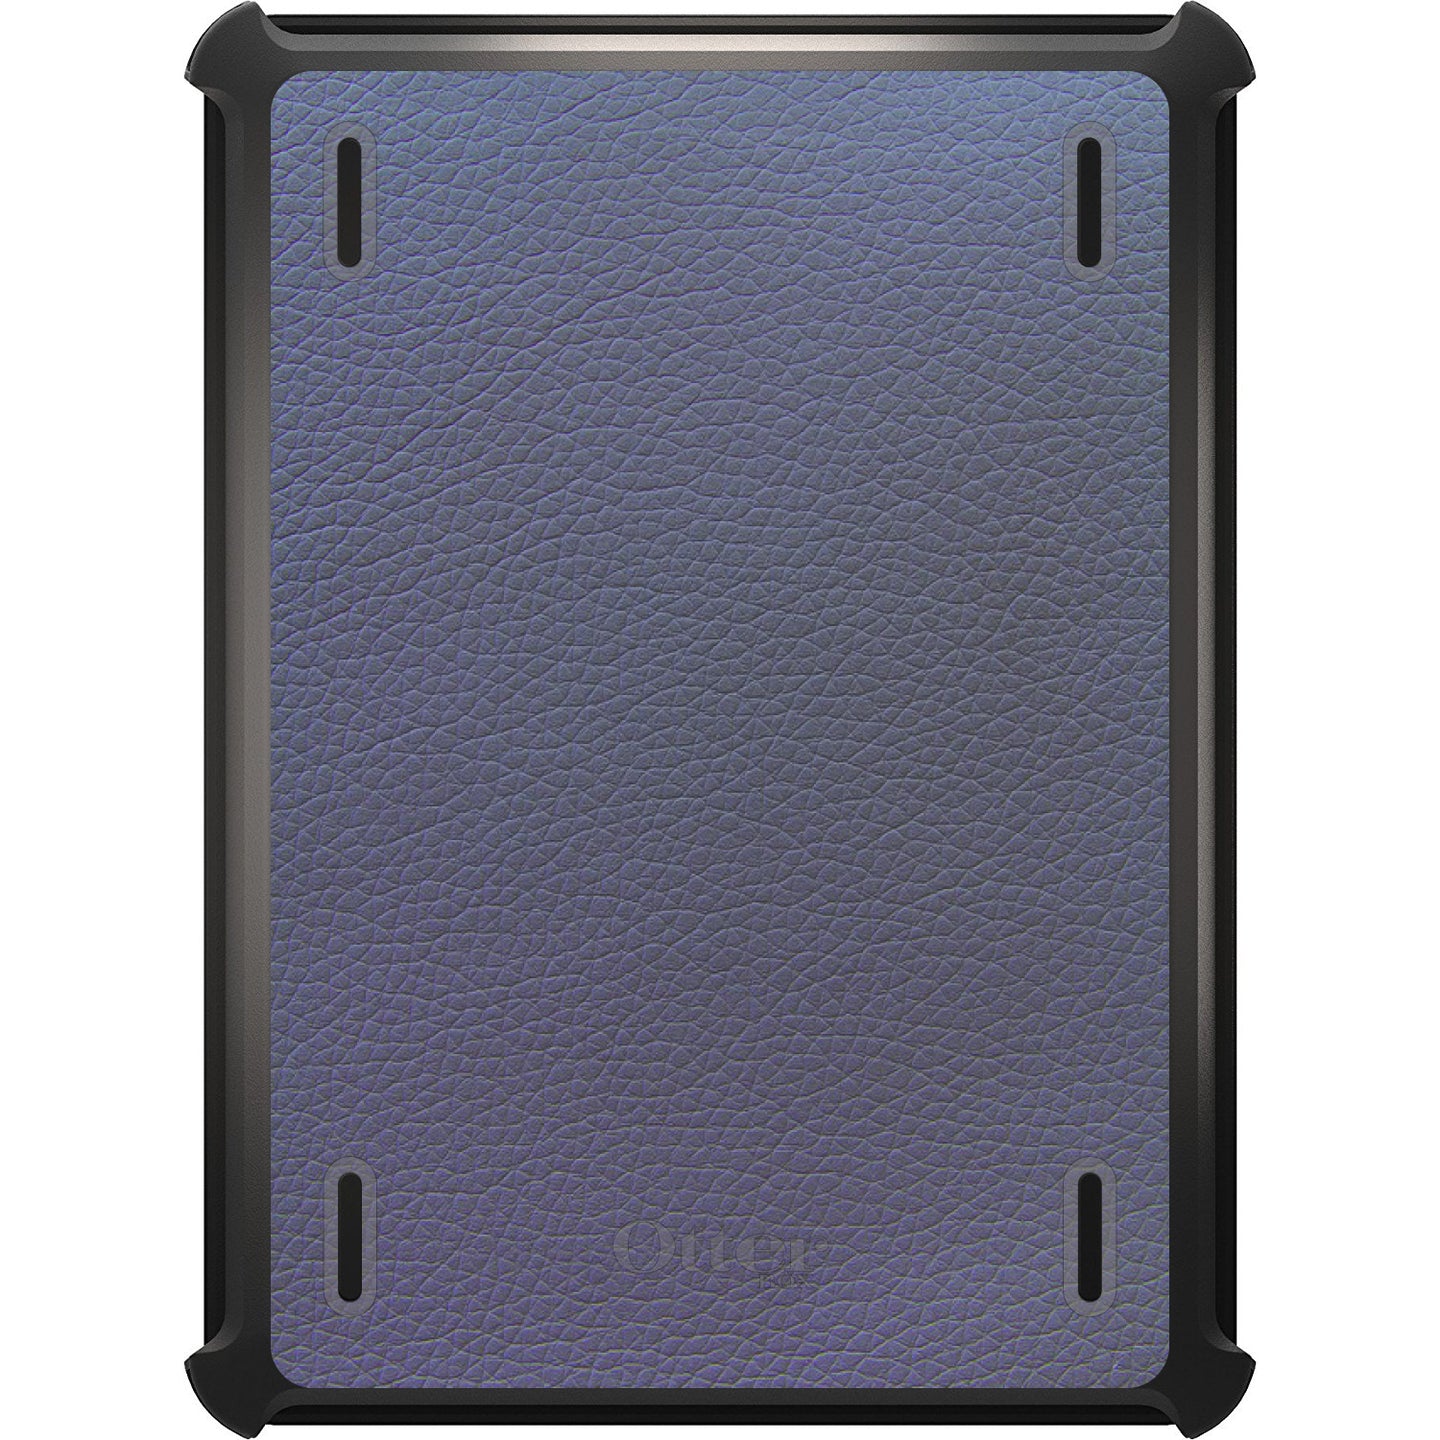 DistinctInk™ OtterBox Defender Series Case for Apple iPad / iPad Pro / iPad Air / iPad Mini - Dark Grey Leather Print Design